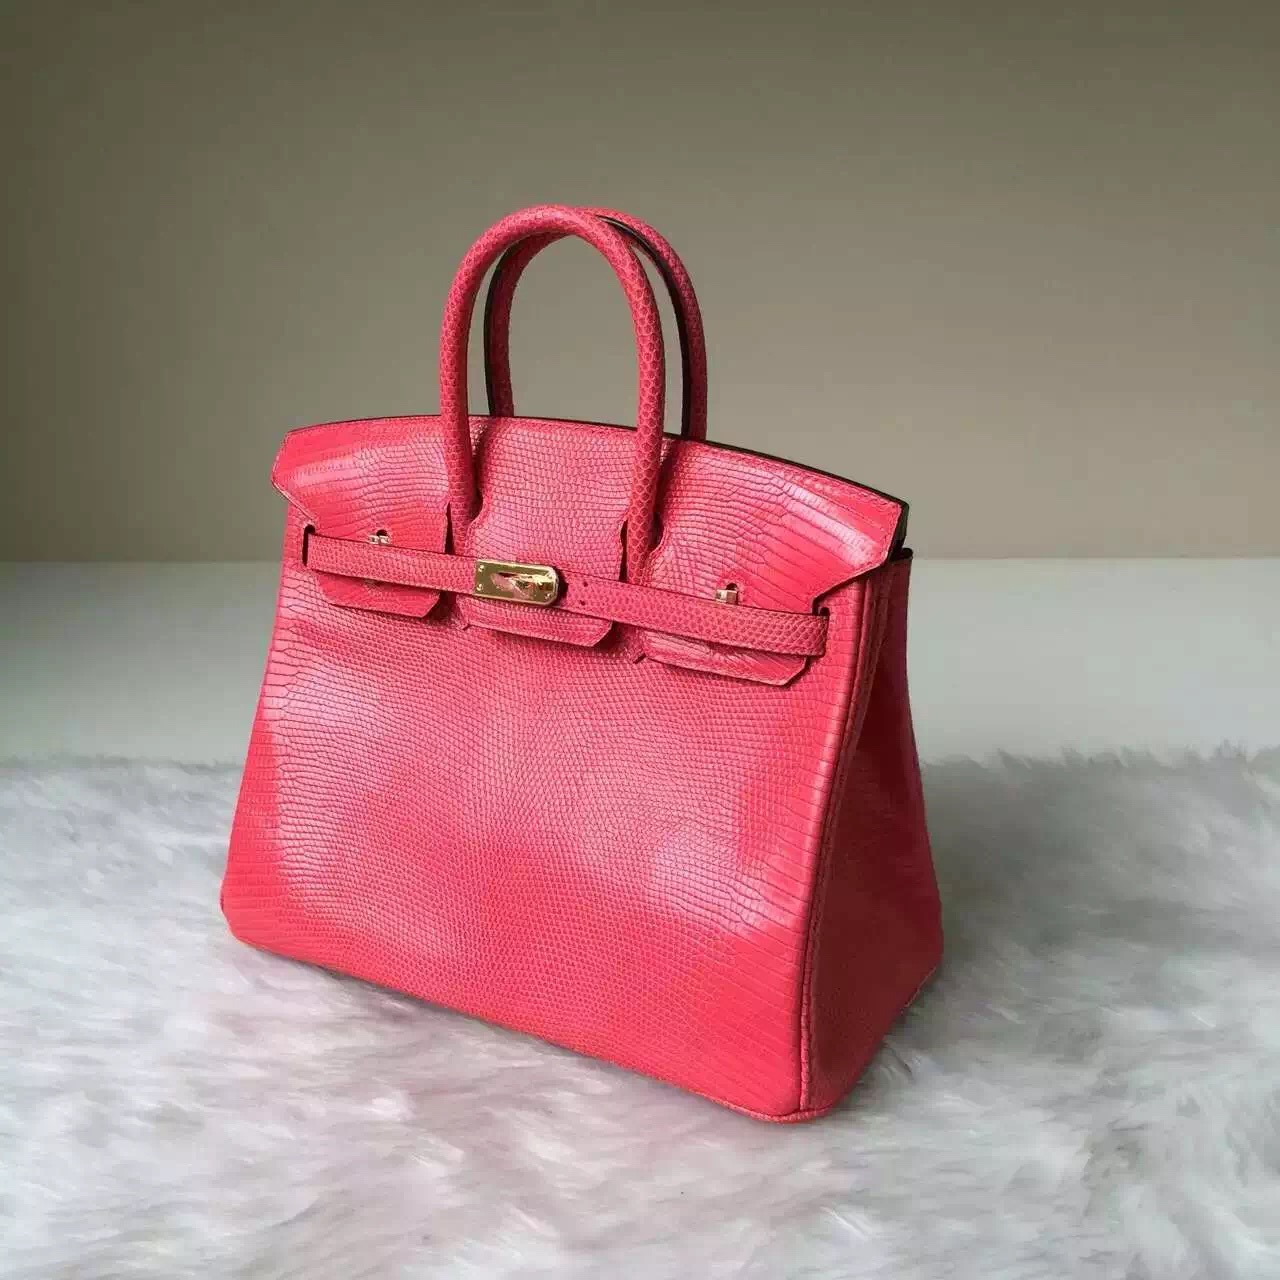 Discount Hermes Lizard Leather Birkin25 Bag in Rose Lipstick